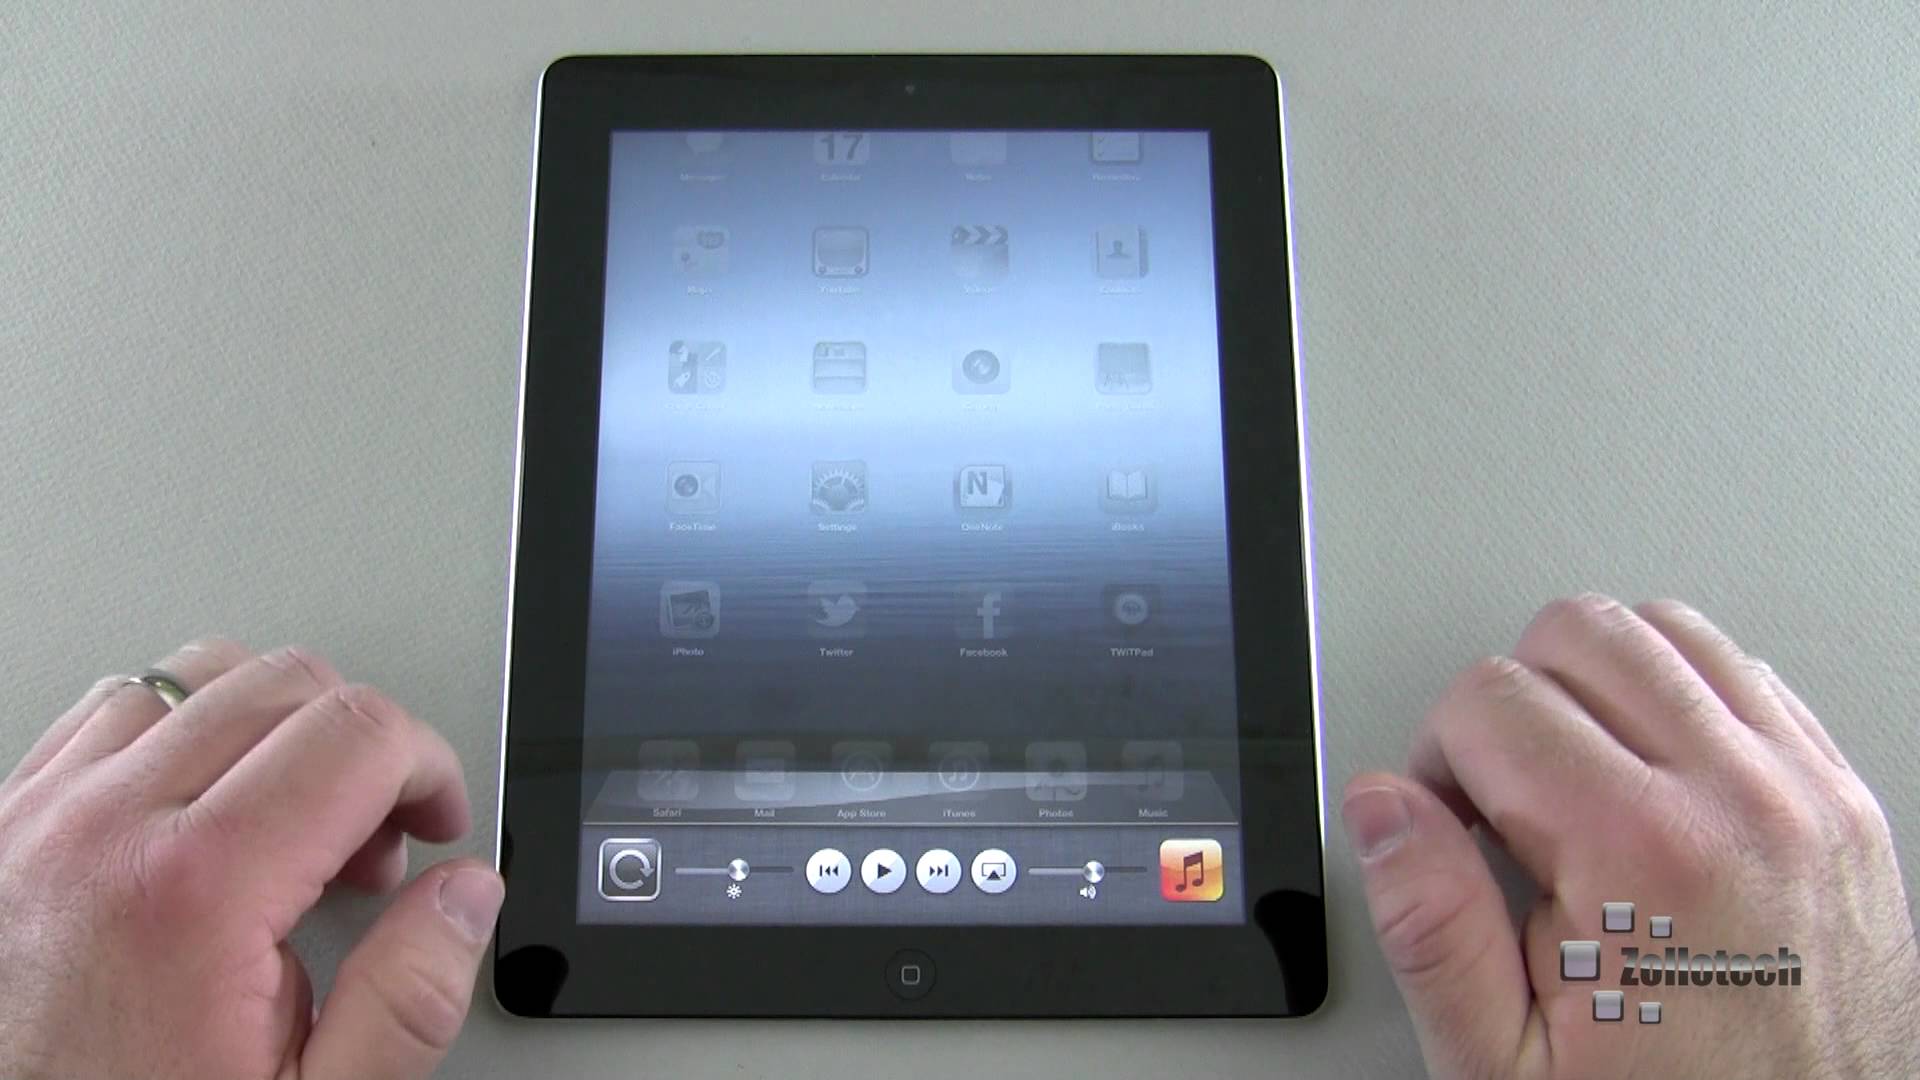 iPad User Guide - The Basics - YouTube